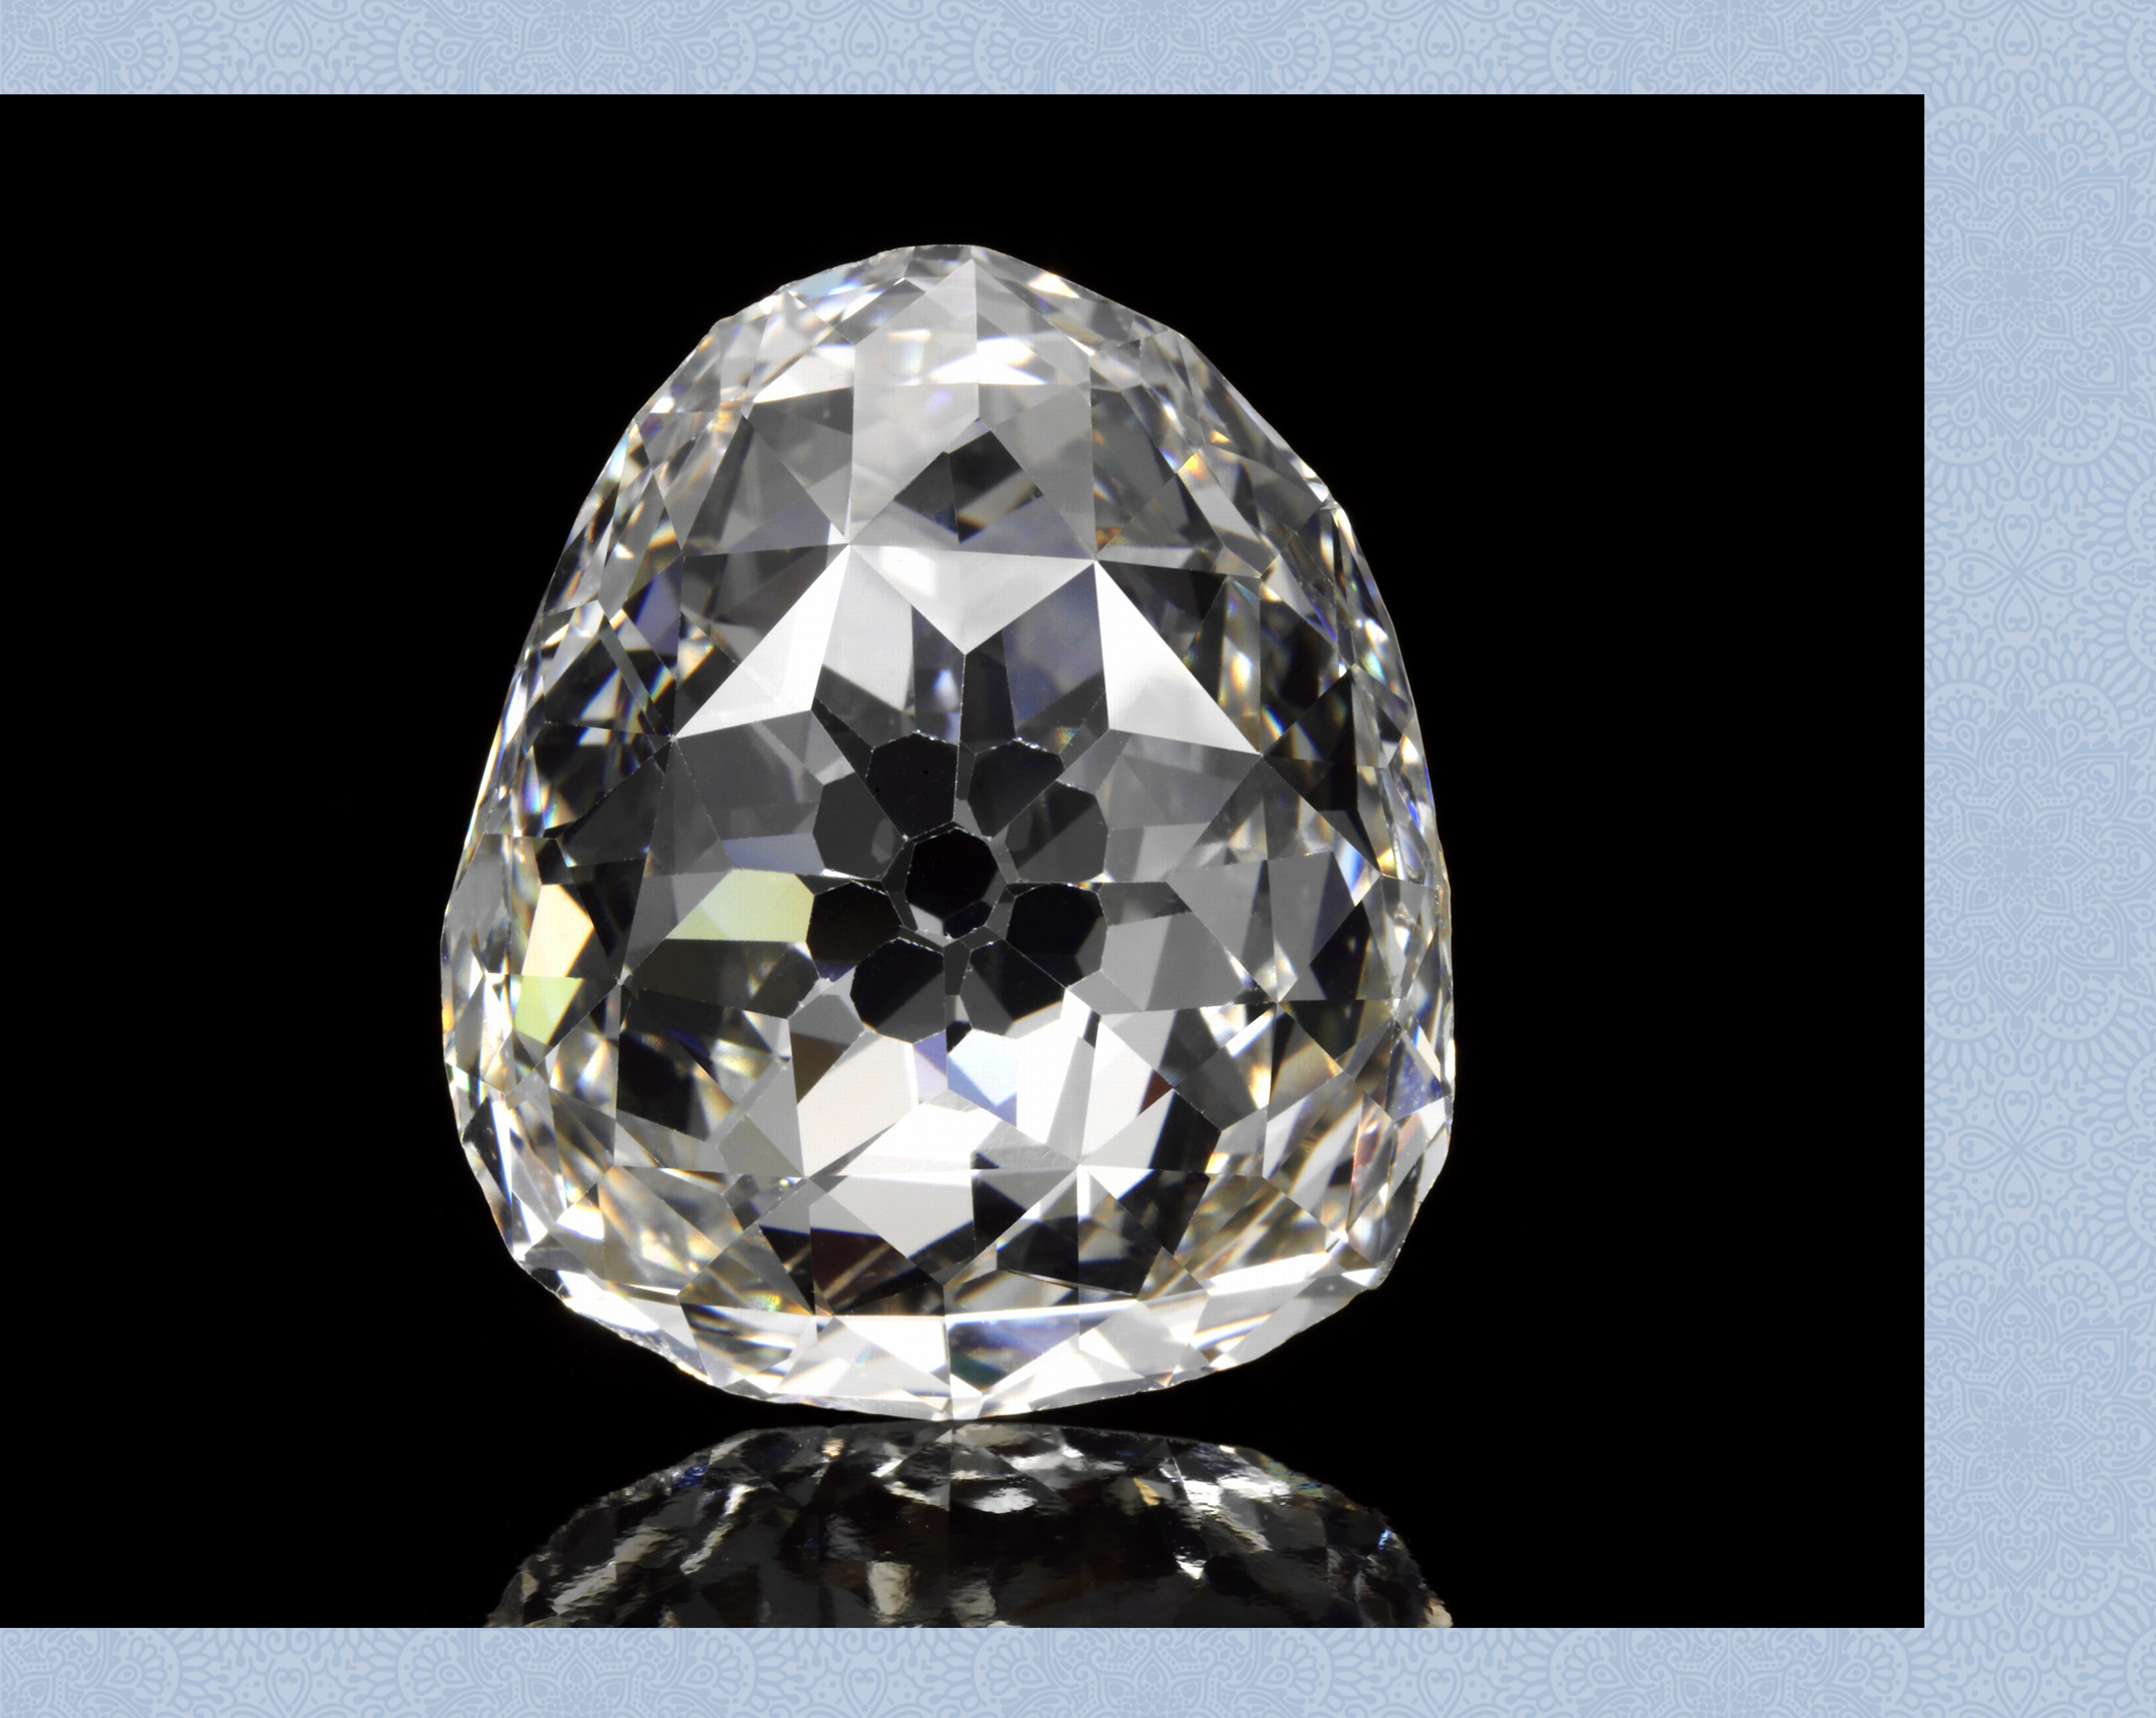 The Beau Sancy: A Classic Type IIa Golconda Diamond, 34.9 Carats of Natural Beauty 